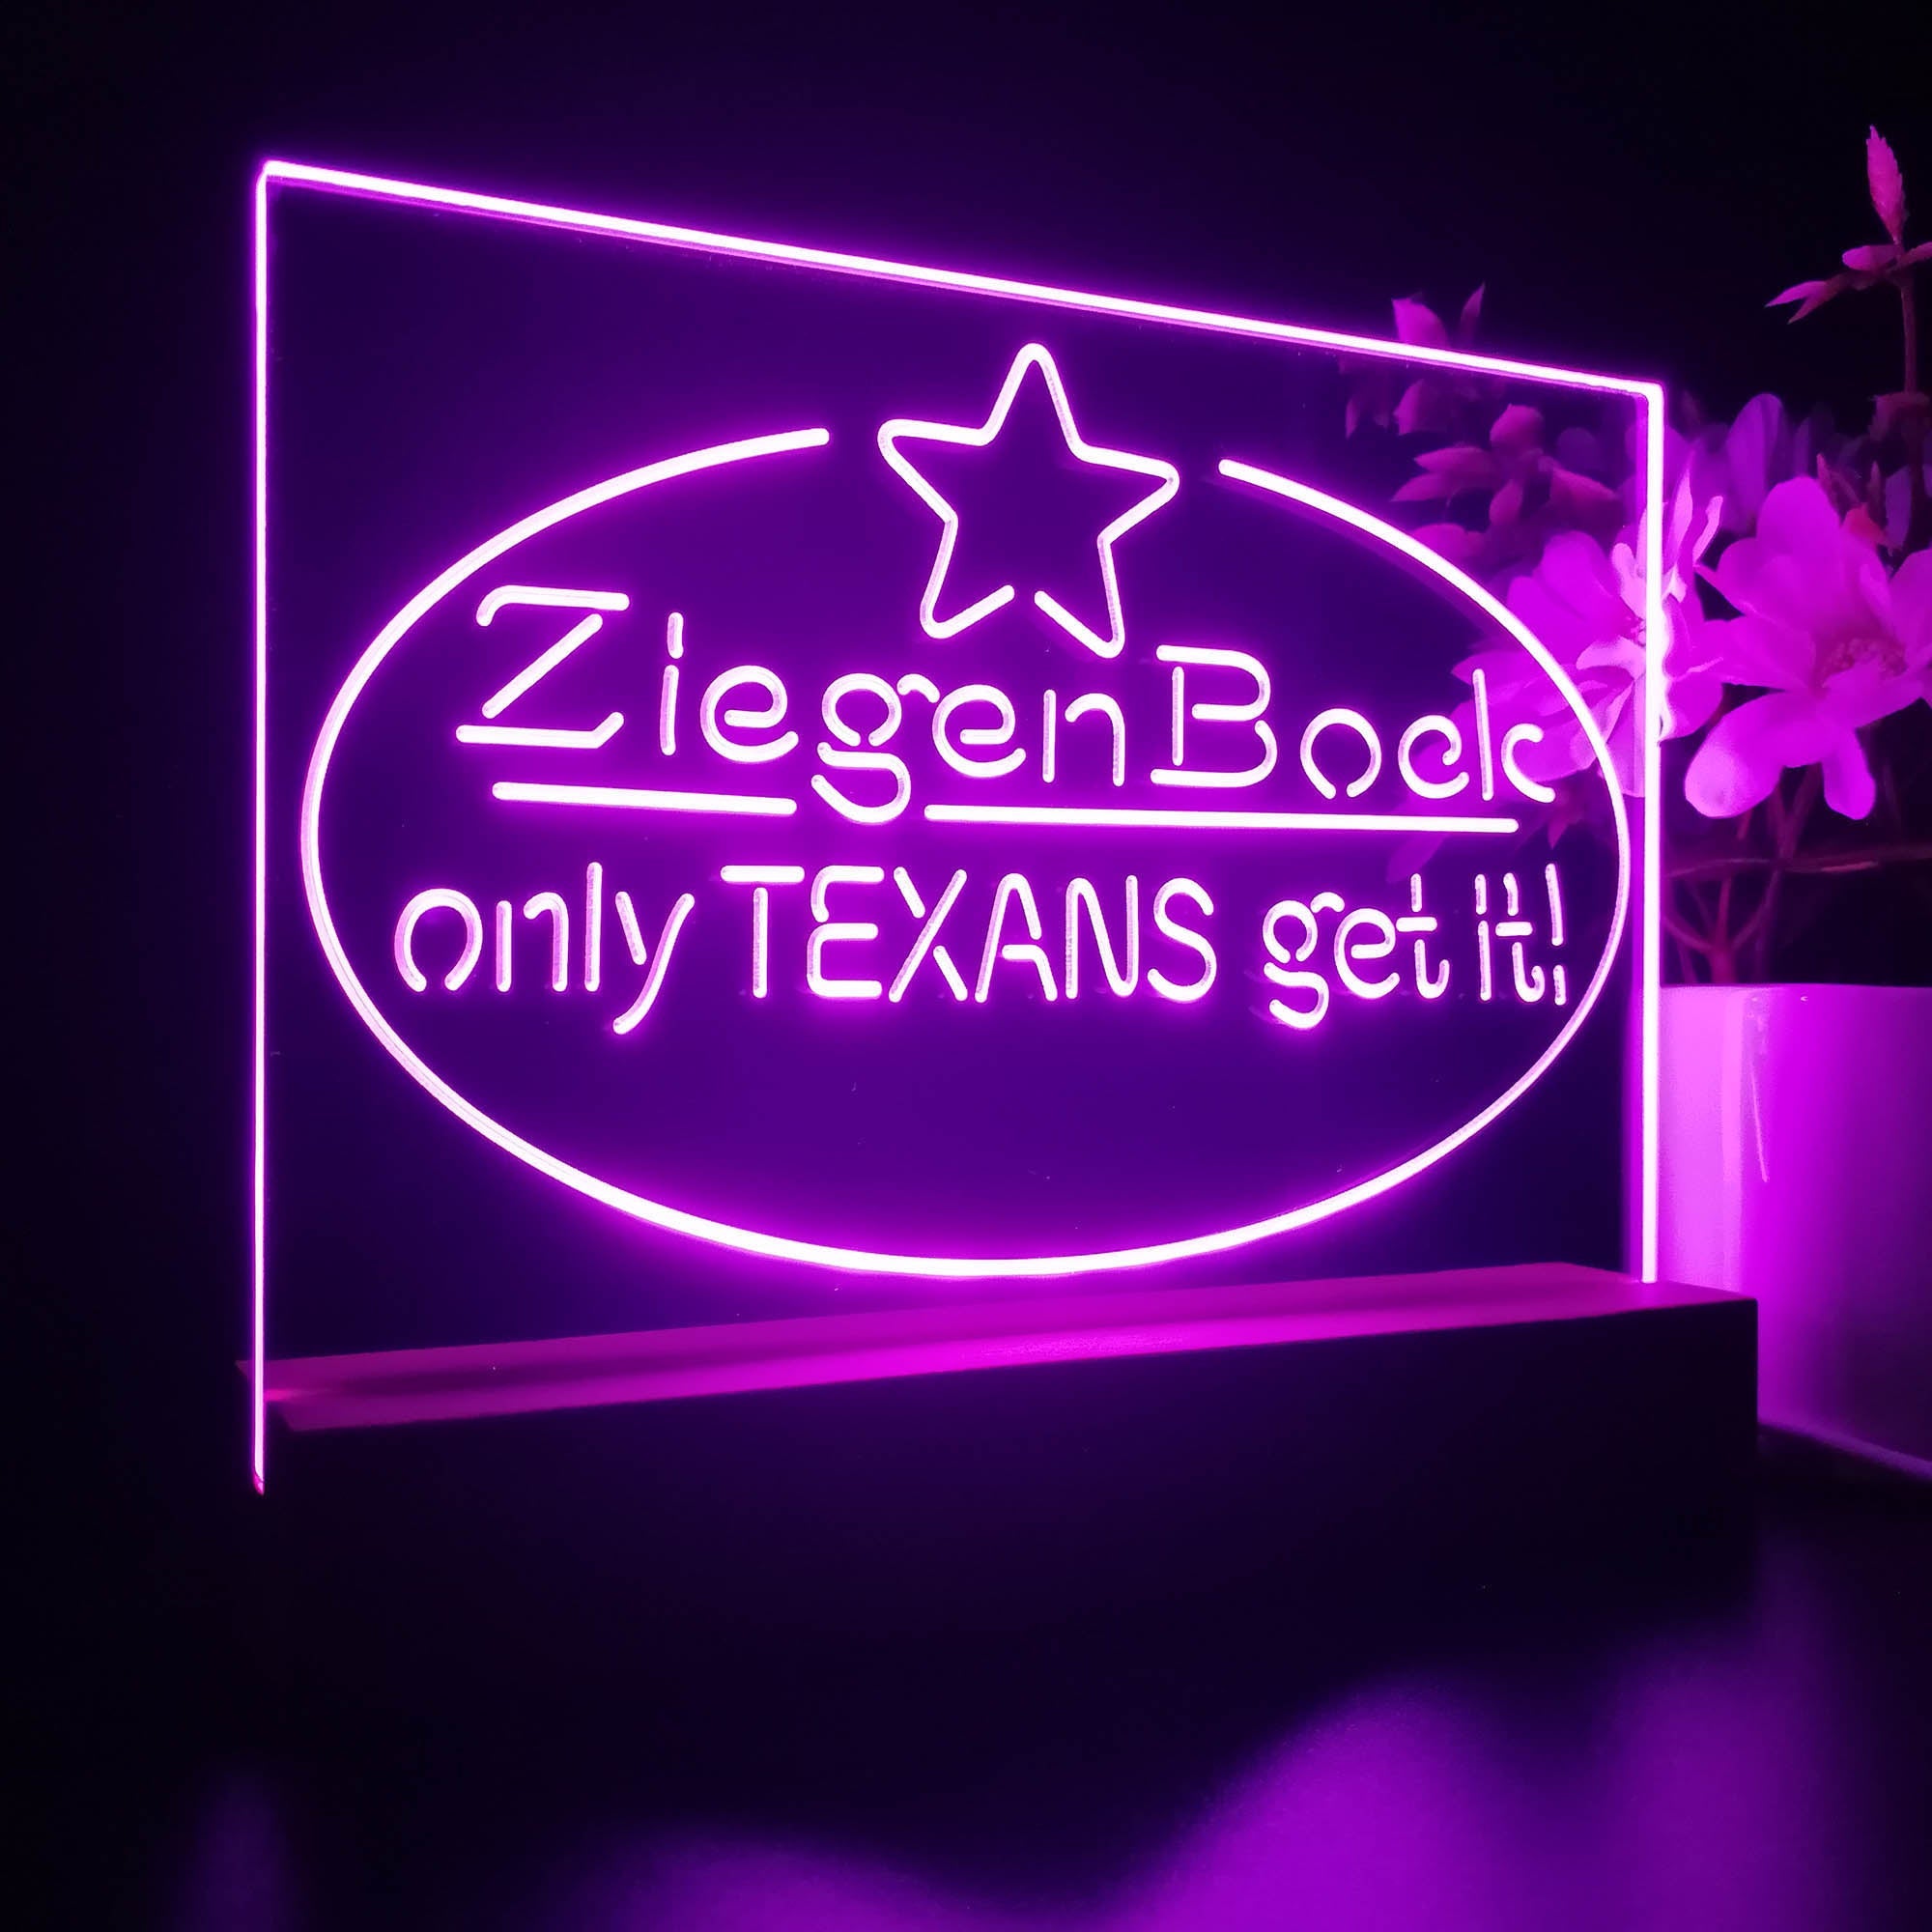 ZiegenBock Amber Only Texans Get it Neon Sign Pub Bar Lamp